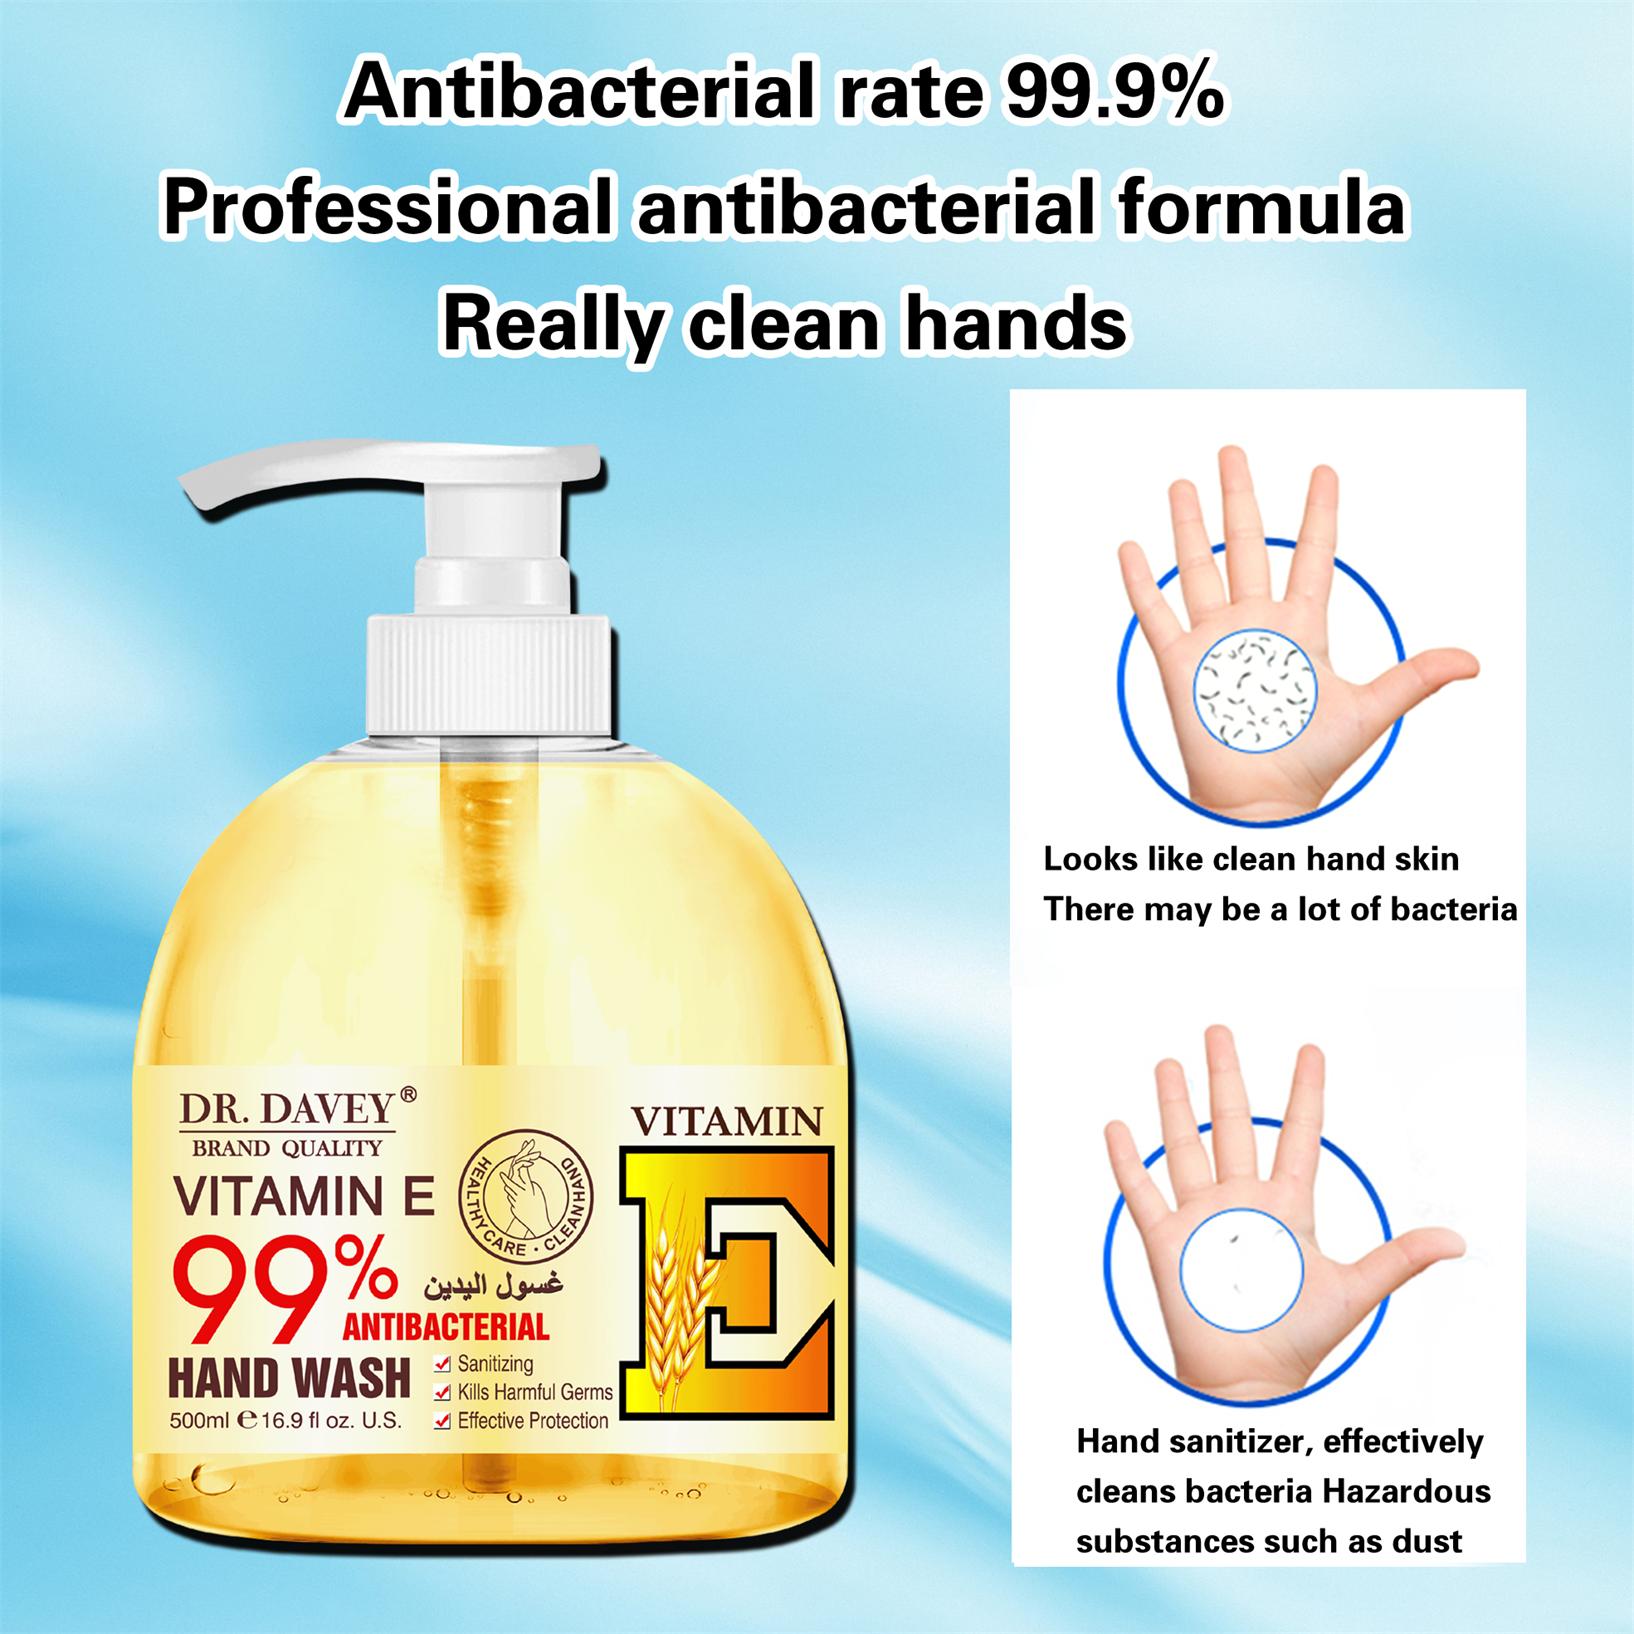 Vitamin E hand wash